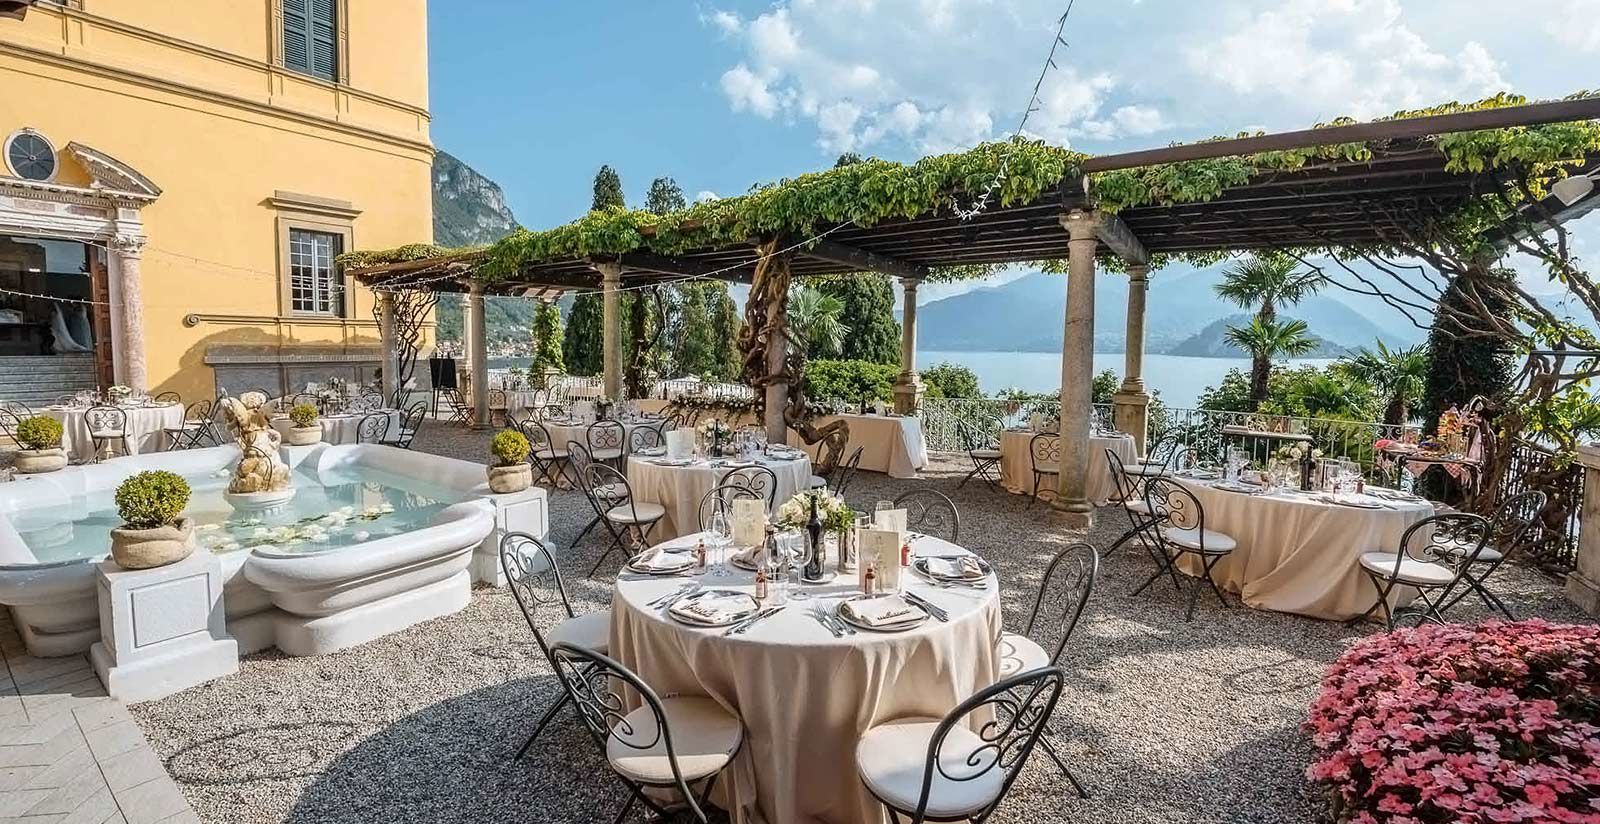 Hotel Villa Cipressi - Hotel 4 stelle per vacanza relax Varenna 4